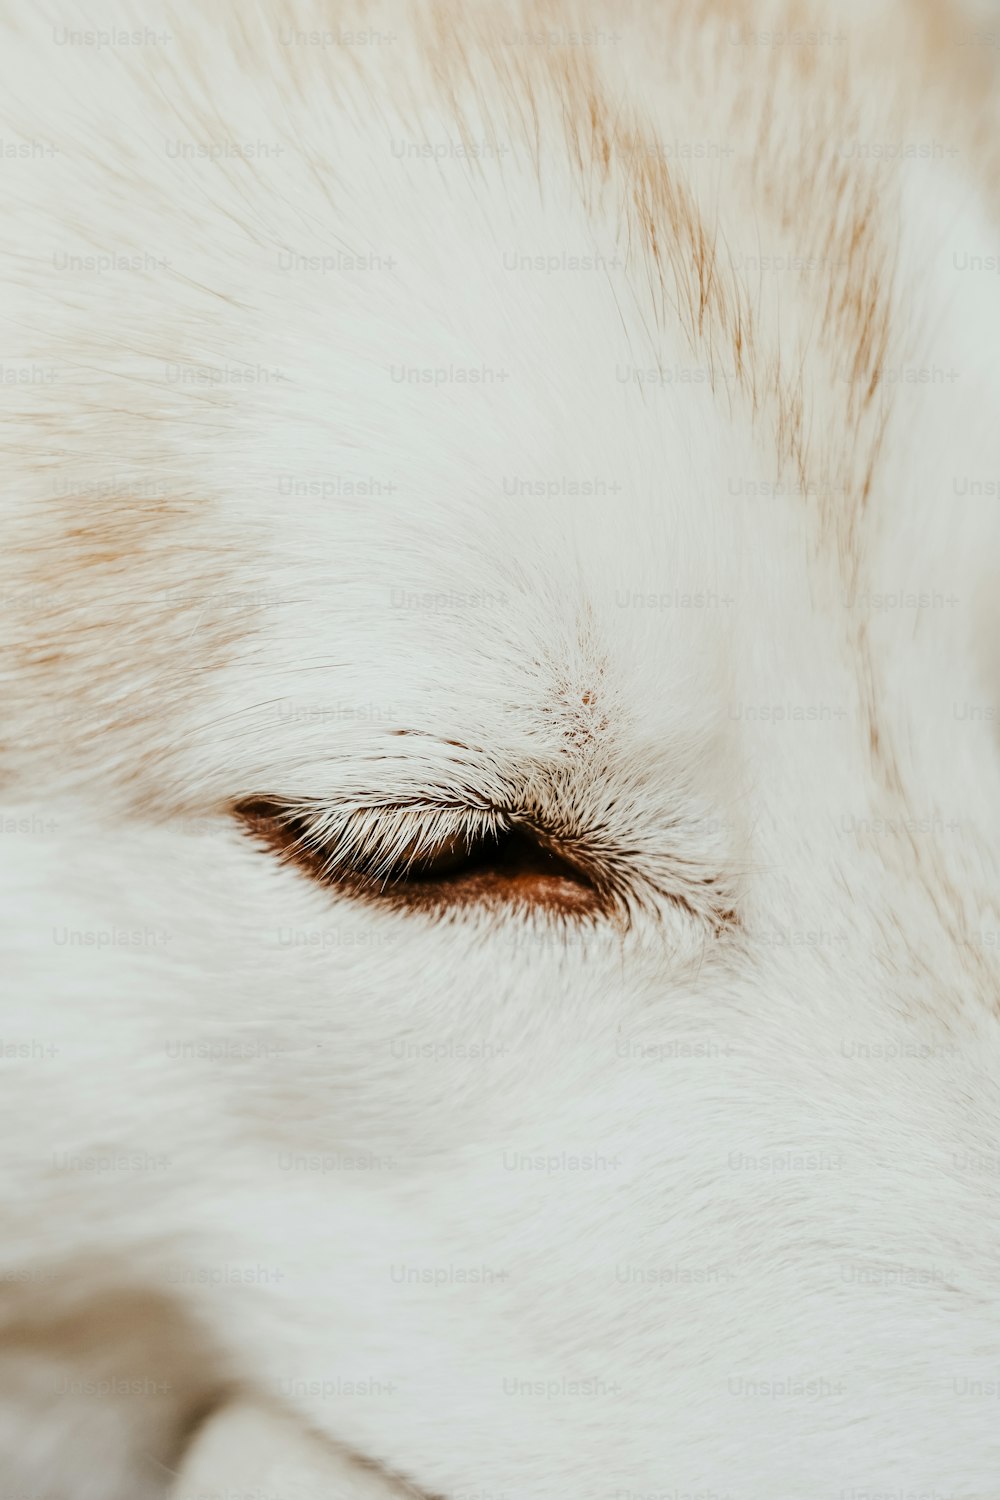 a close up of a white dog's eye